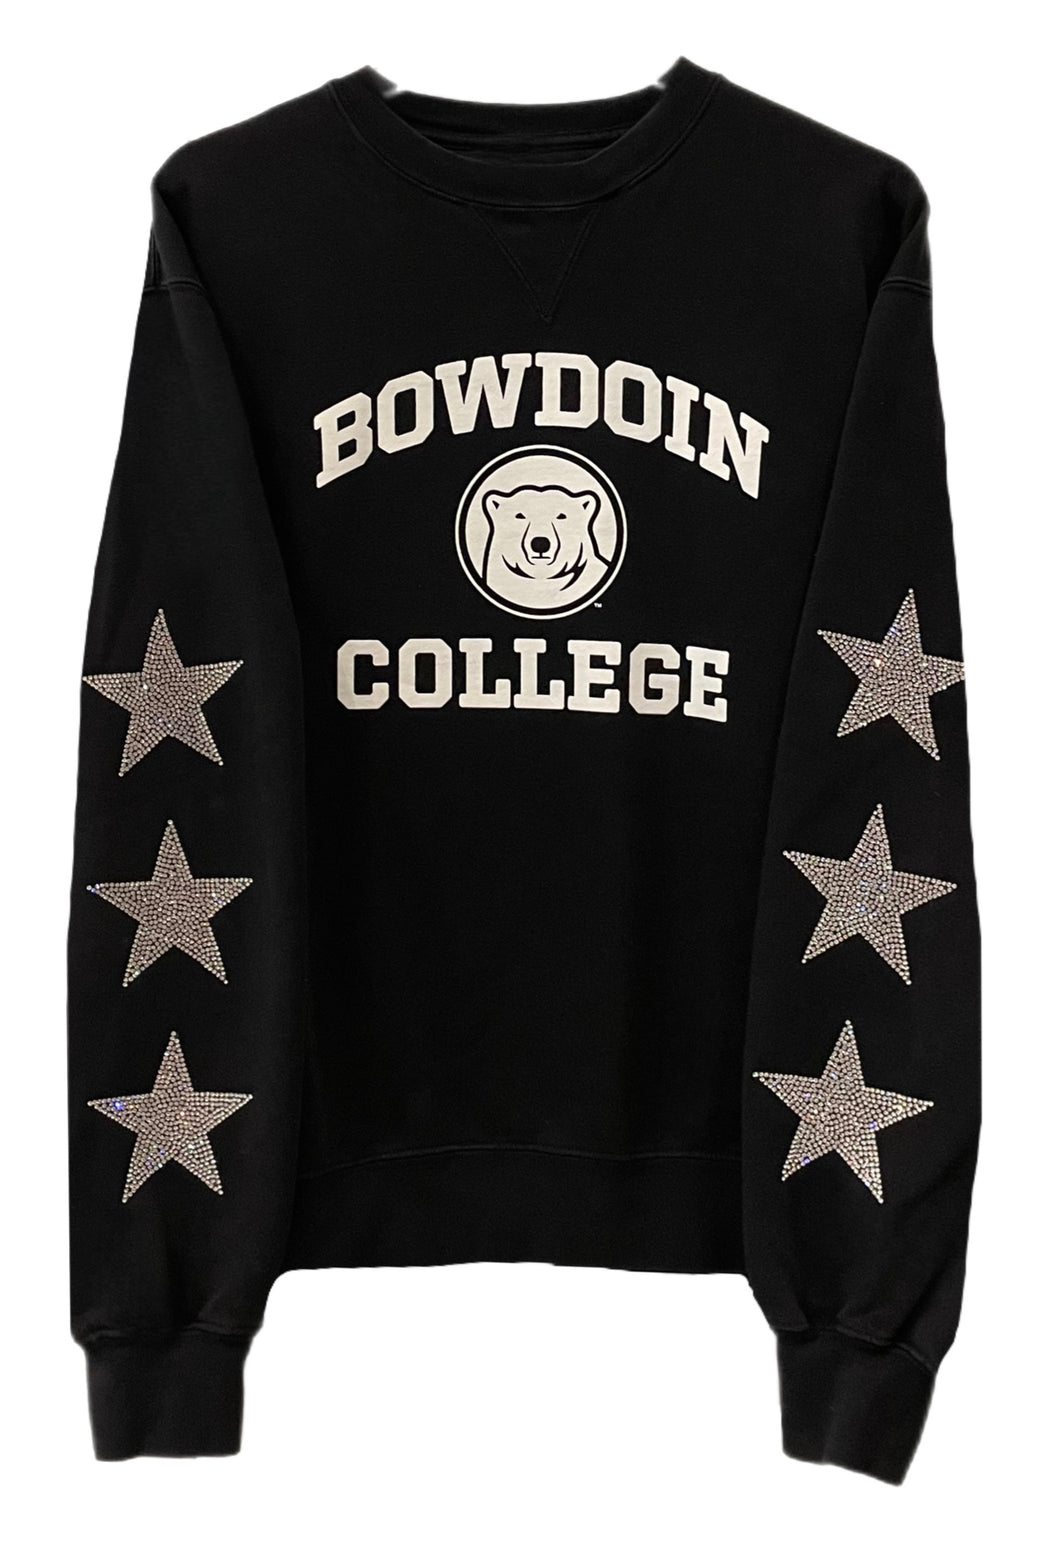 Bowdoin College, One of a KIND Vintage Sweatshirt with Three Crystal Star Design